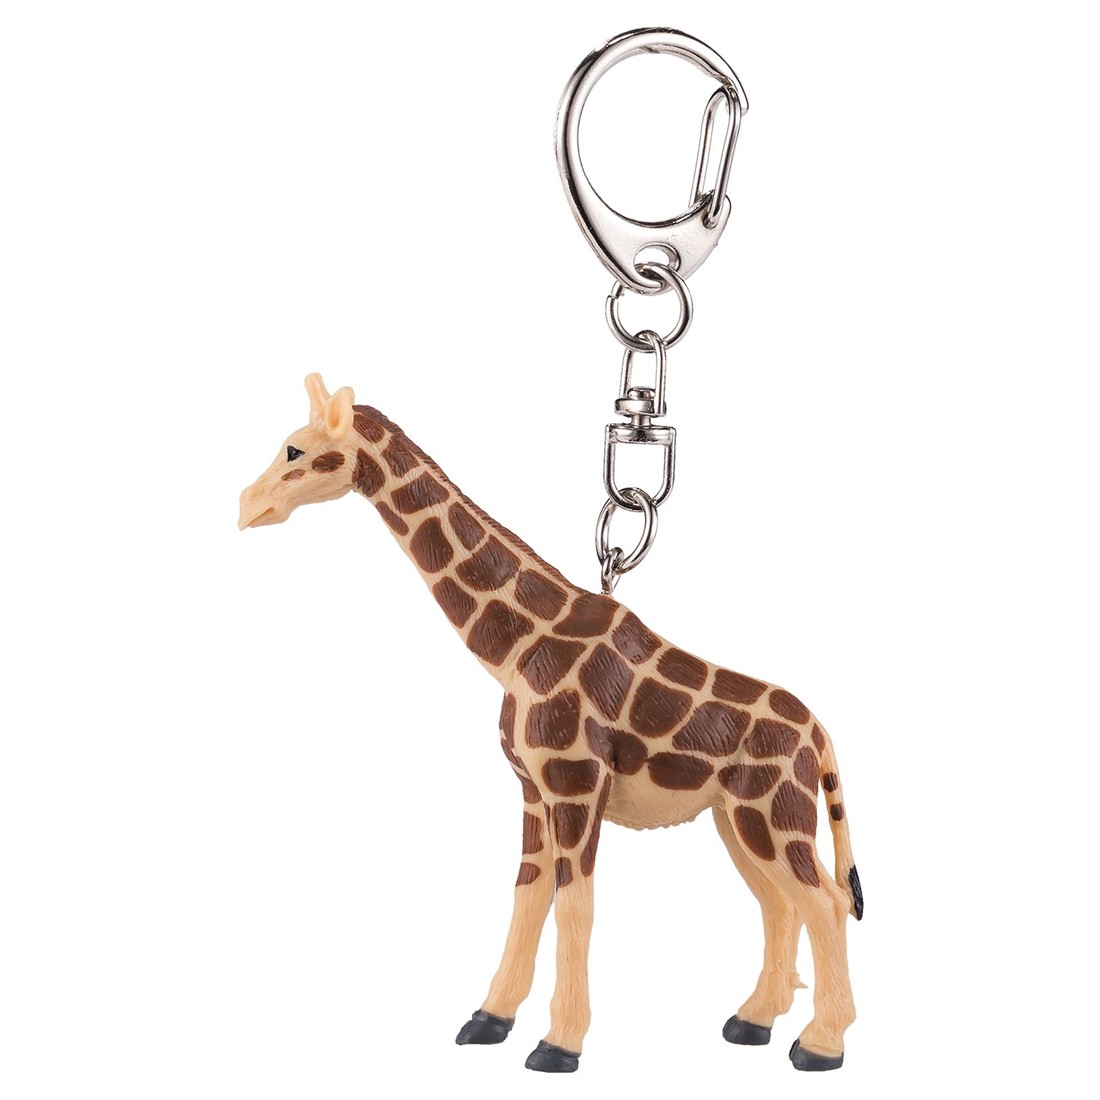 Triviaal stel voor Verslaggever Mojo Wildlife Sleutelhanger Giraf - 387493 kopen?